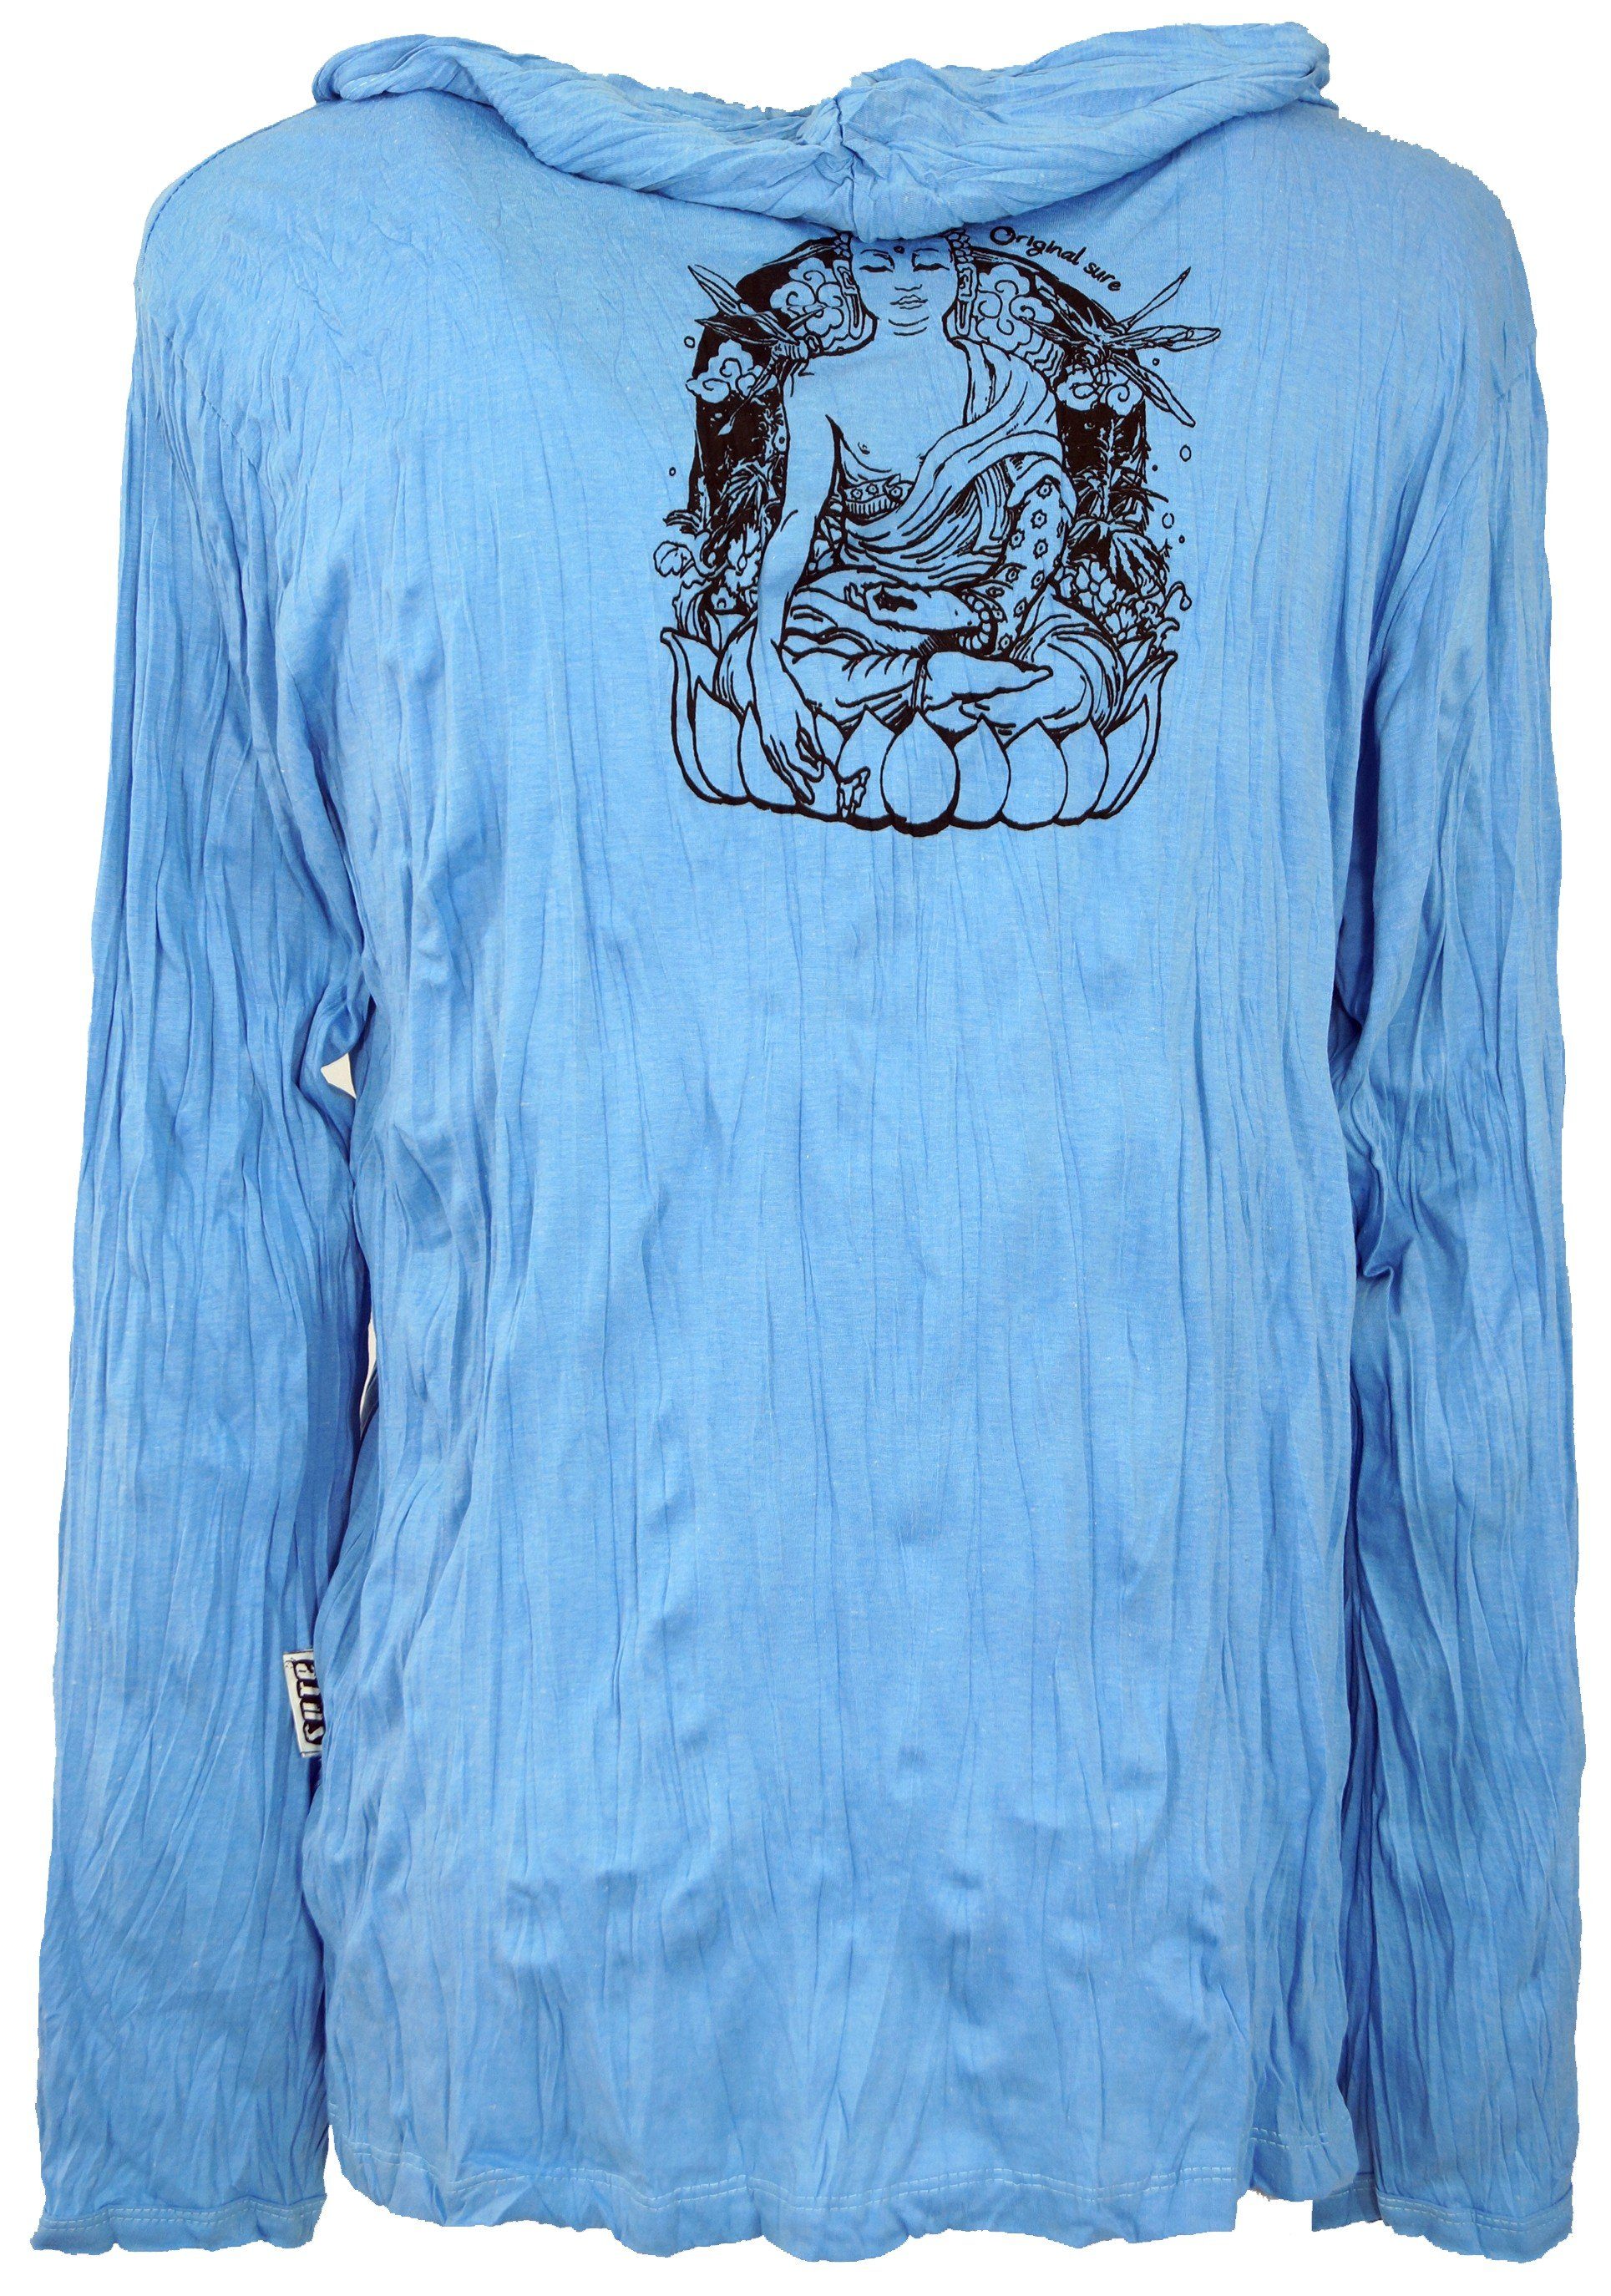 Guru-Shop T-Shirt Sure Langarmshirt, Kapuzenshirt Goa Meditation.. alternative Bekleidung Festival, hellblau Style